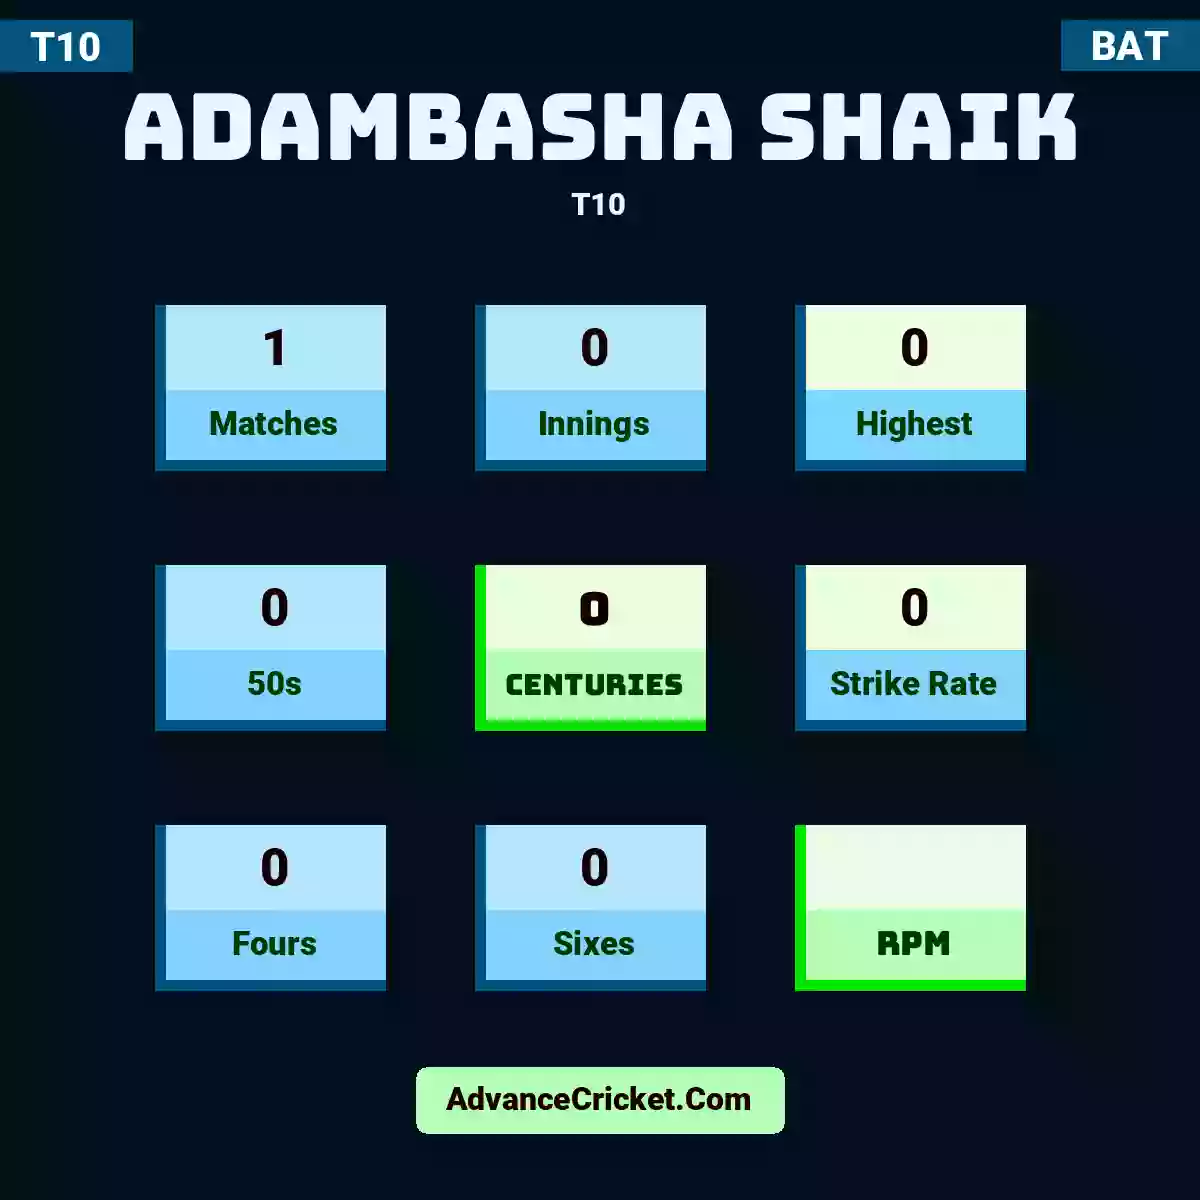 Adambasha Shaik T10 , Adambasha Shaik played 1 matches, scored 0 runs as highest, 0 half-centuries, and 0 centuries, with a strike rate of 0. A.Shaik hit 0 fours and 0 sixes.